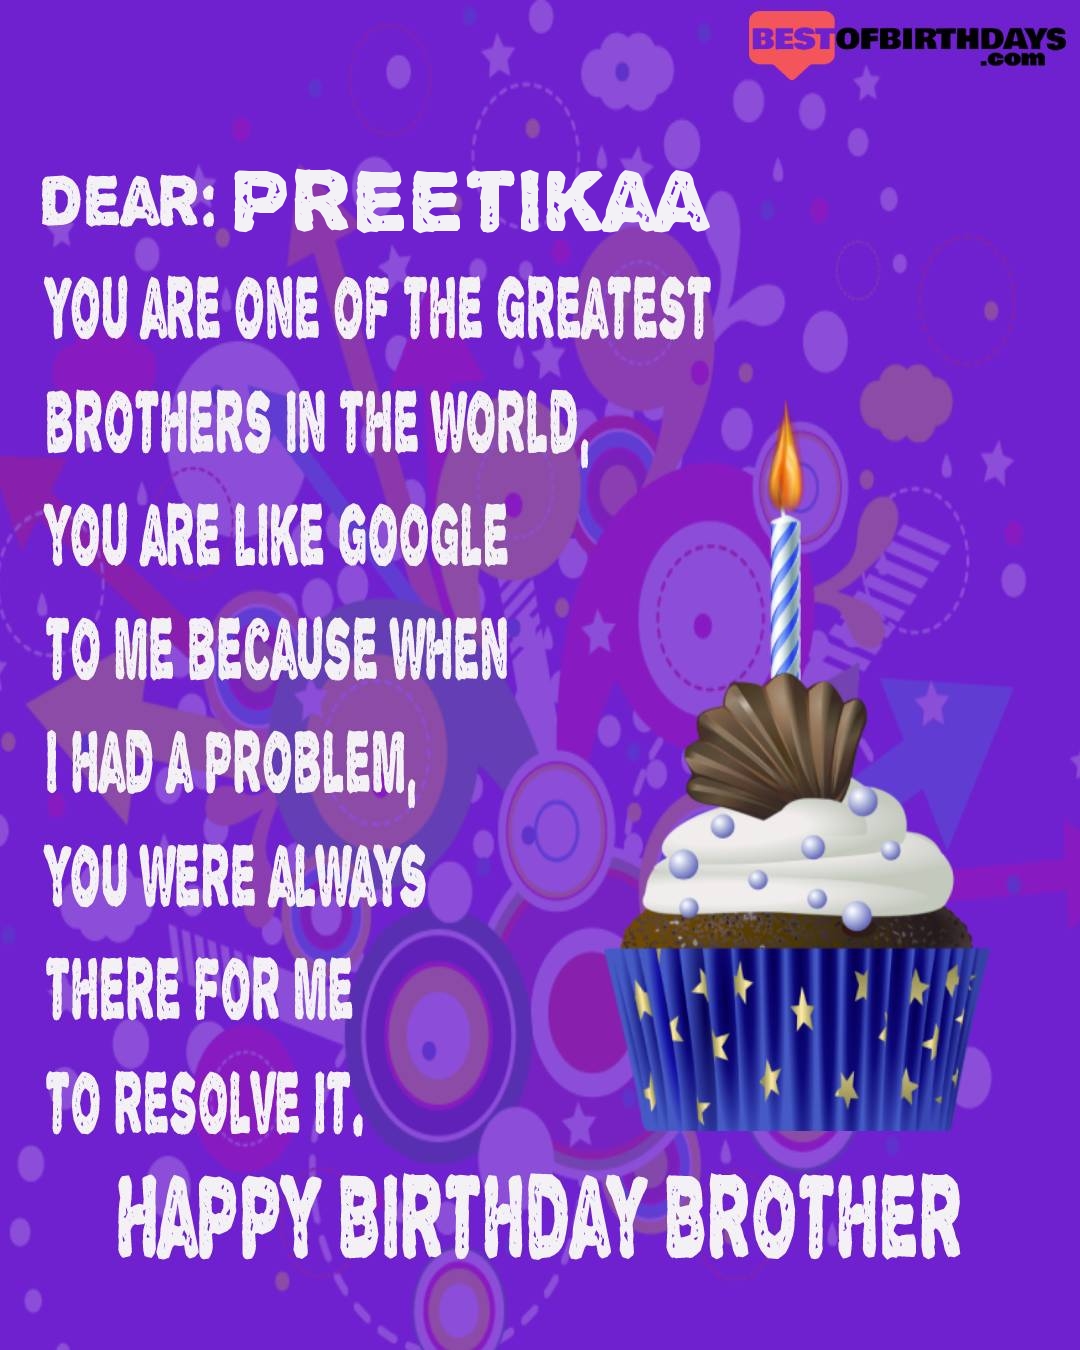 Happy birthday preetikaa bhai brother bro